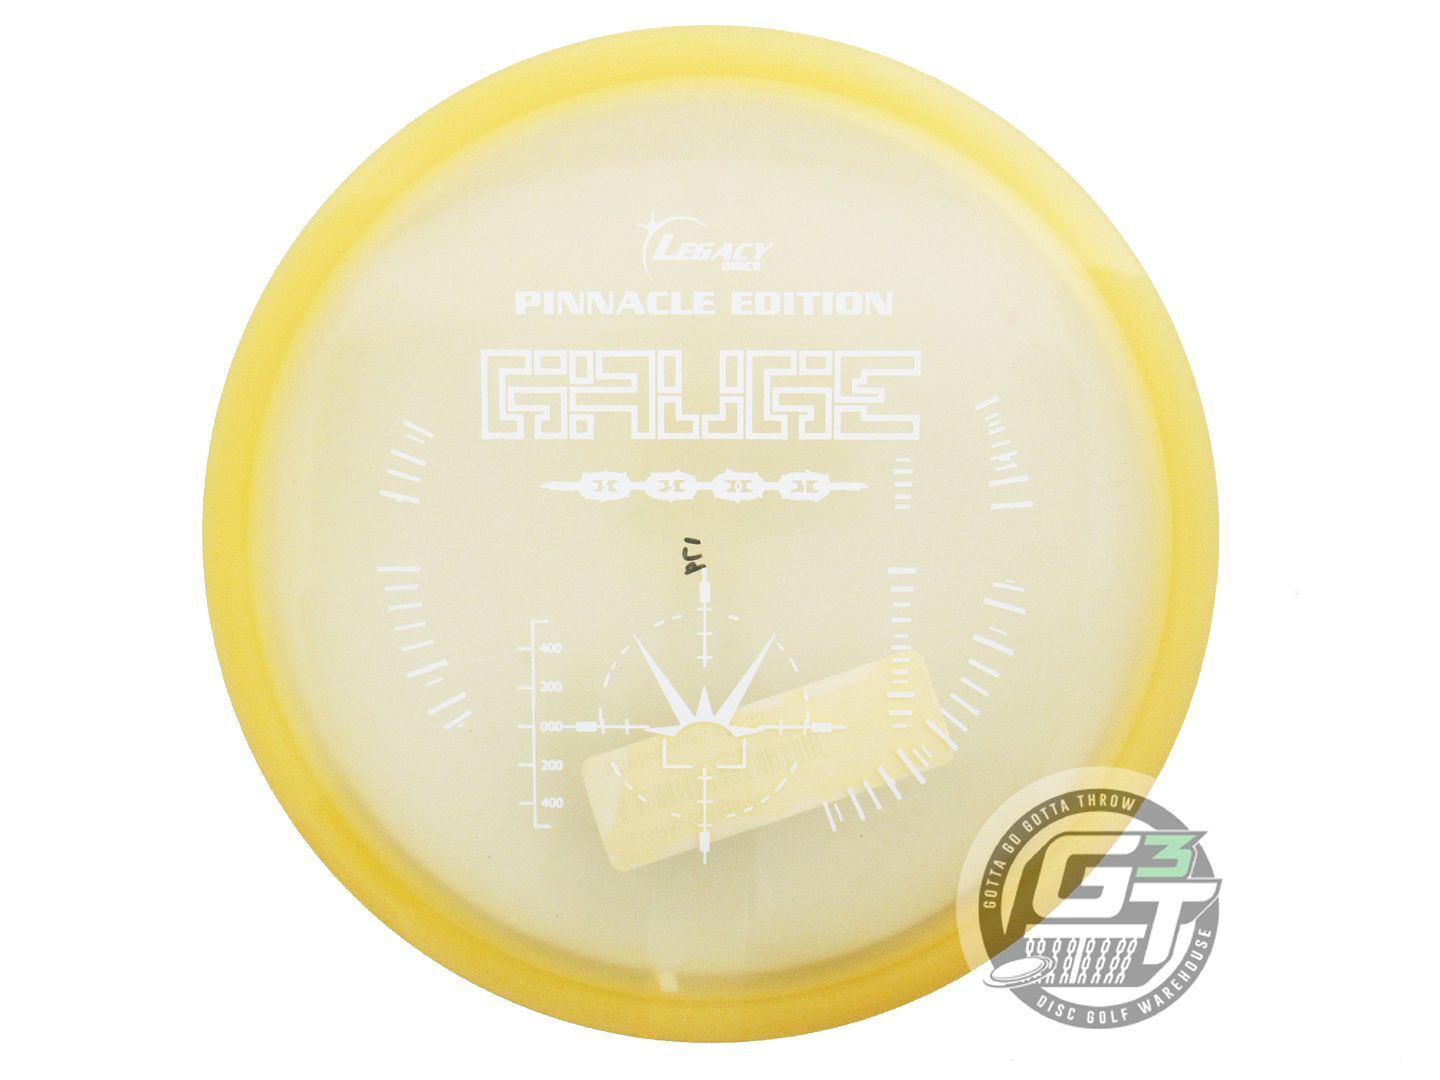 Legacy Pinnacle Edition Gauge Midrange Golf Disc (Individually Listed)